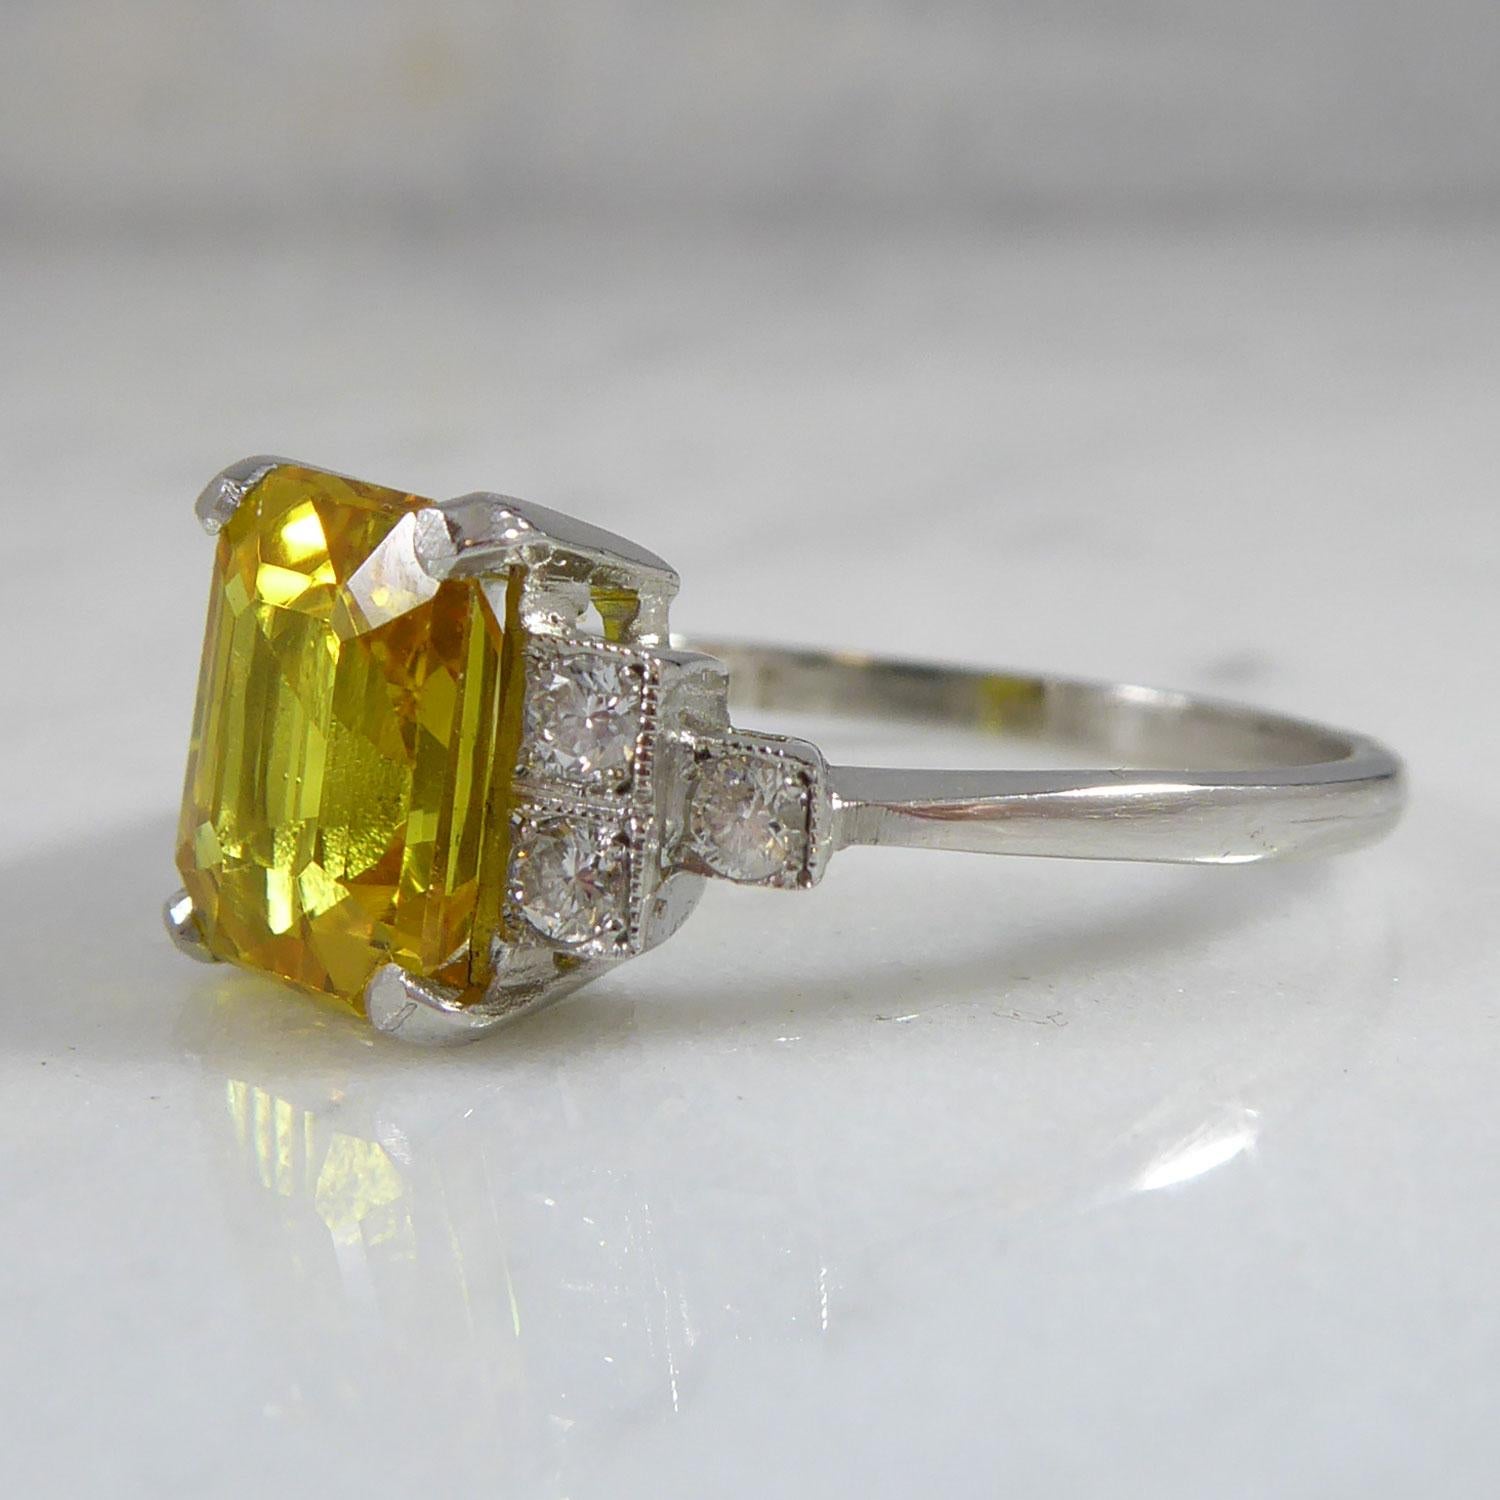 Octagon Cut Art Deco Style 2.87 Carat Yellow Sapphire and Diamond Ring, Contemporary Design